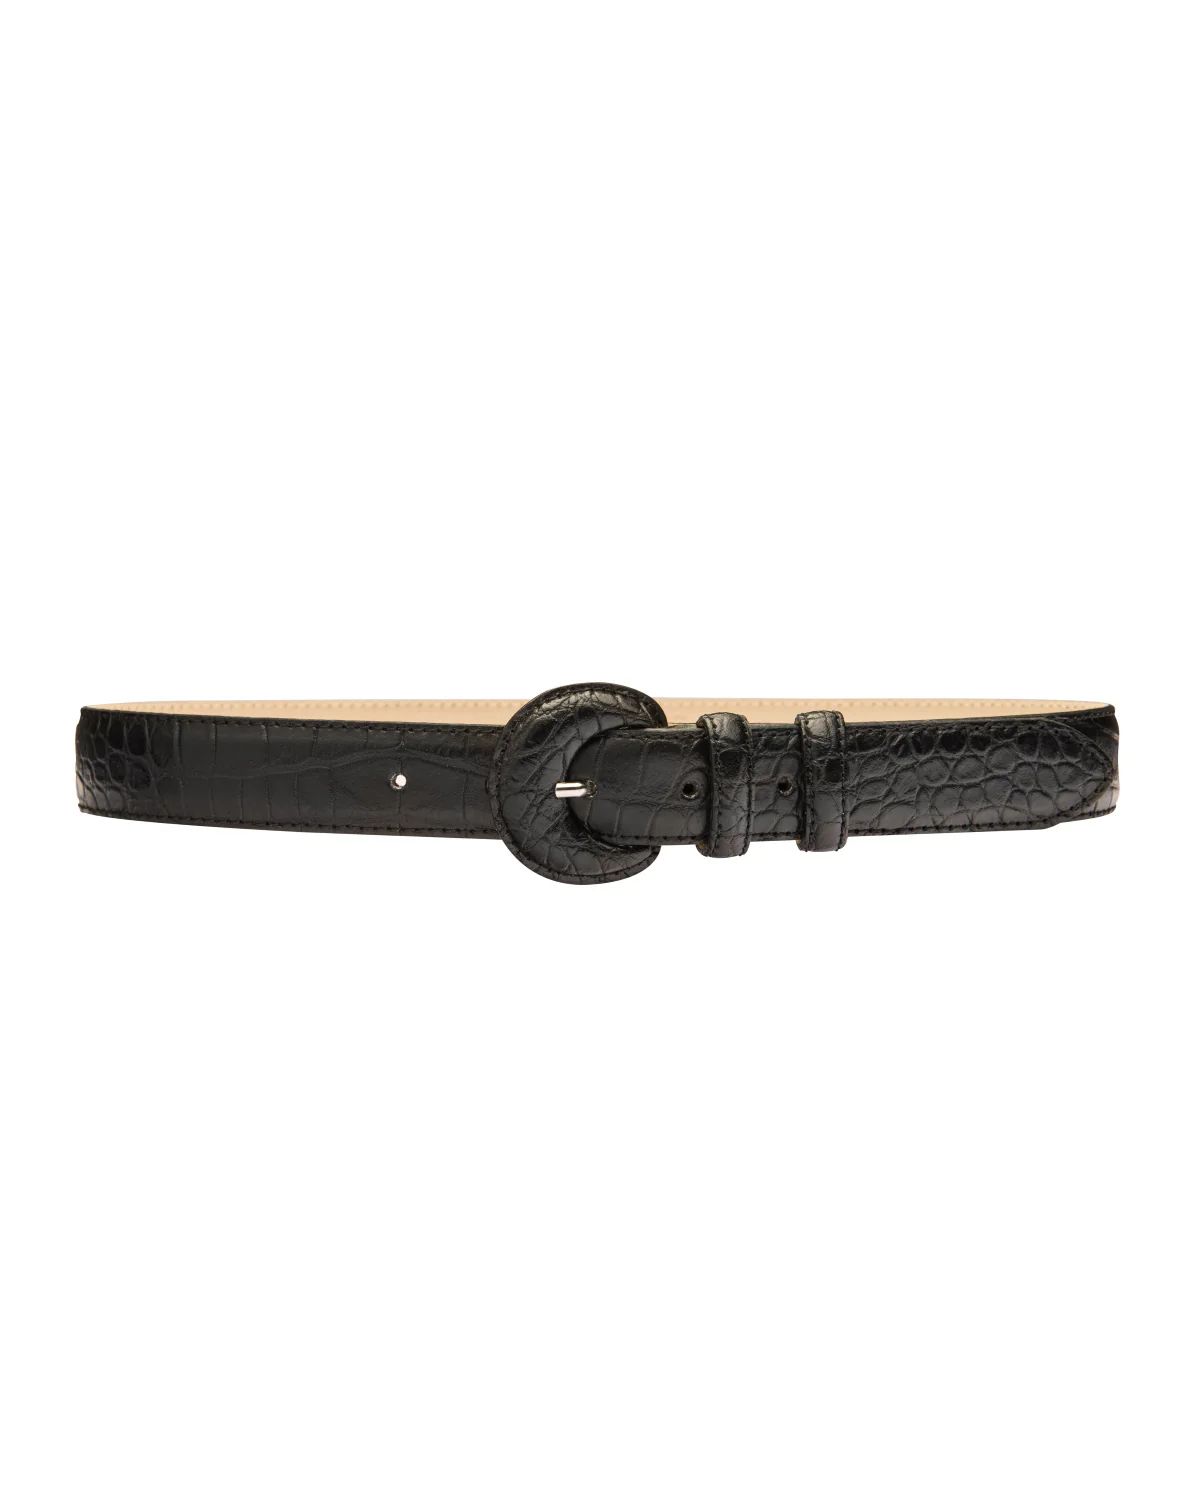 Sadie croc print leather waist belt | Black & Brown London